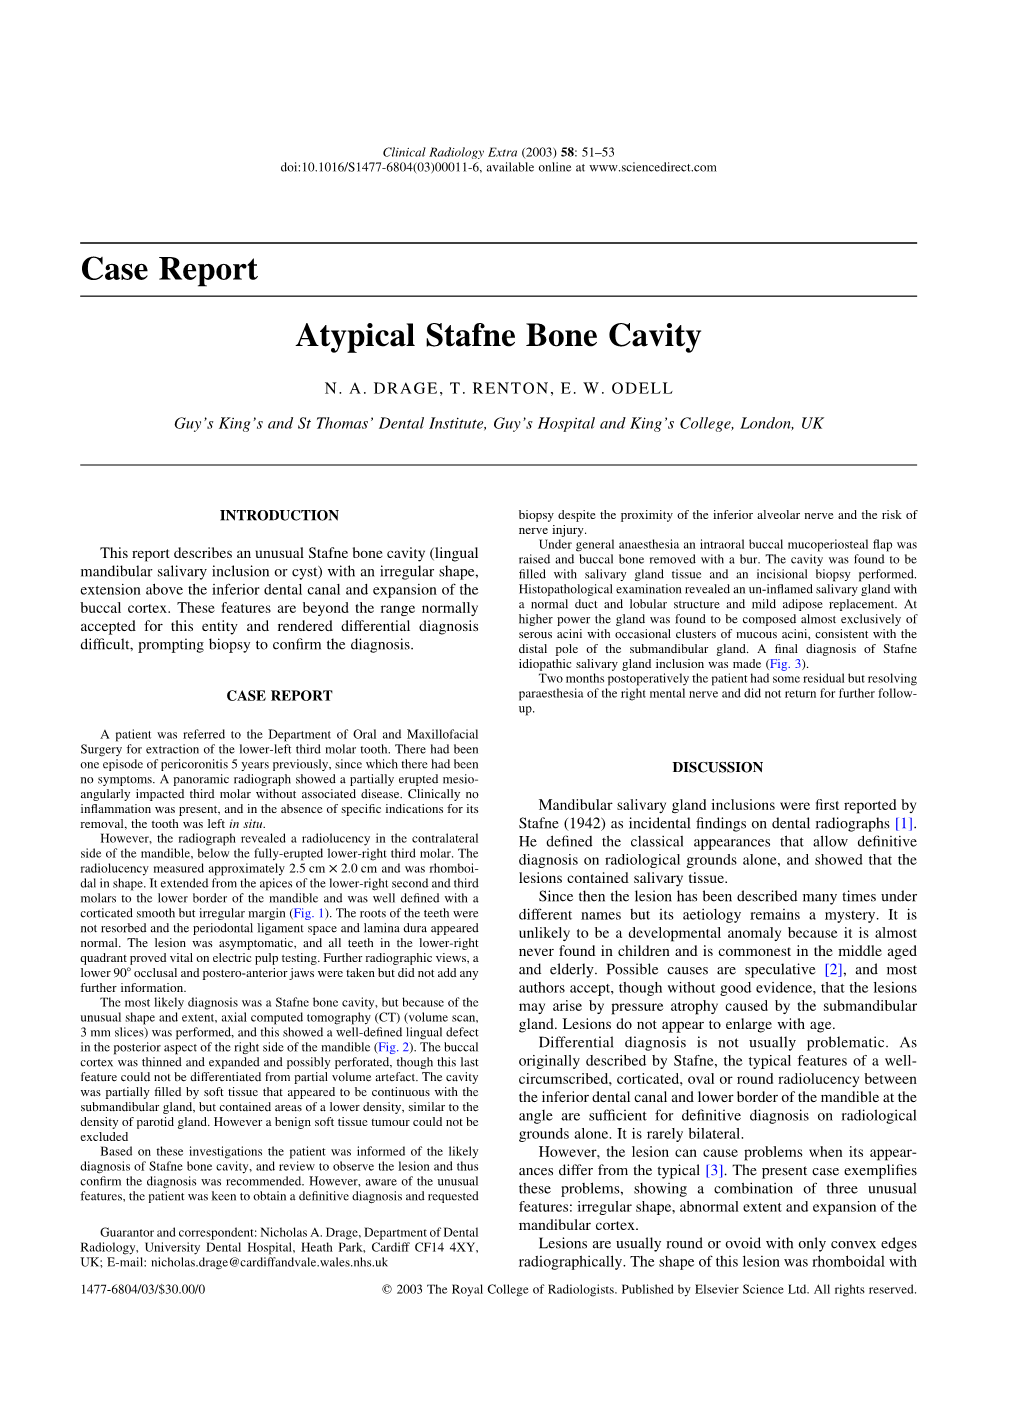 Case Report Atypical Stafne Bone Cavity